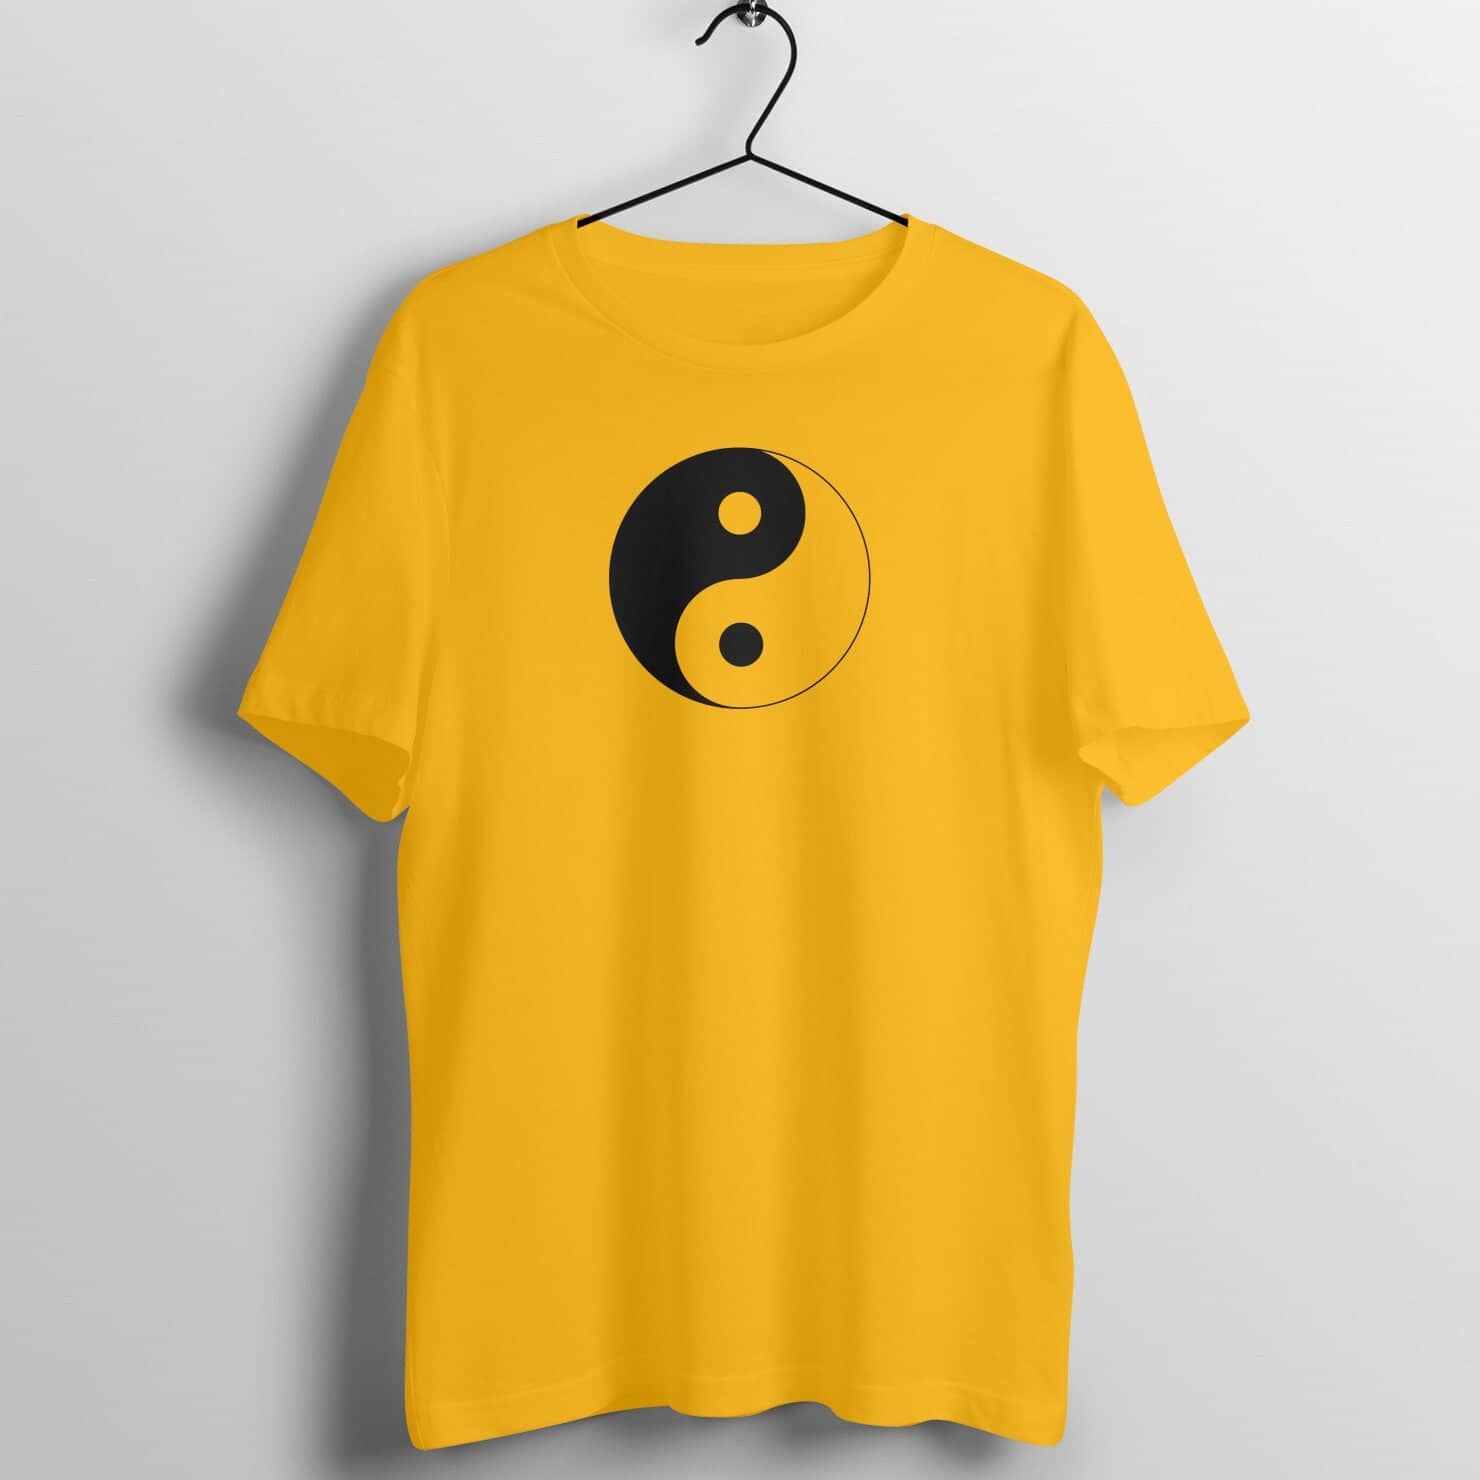 Ying Yang Symbol Exclusive Yellow T Shirt for Men and Women freeshipping - Catch My Drift India